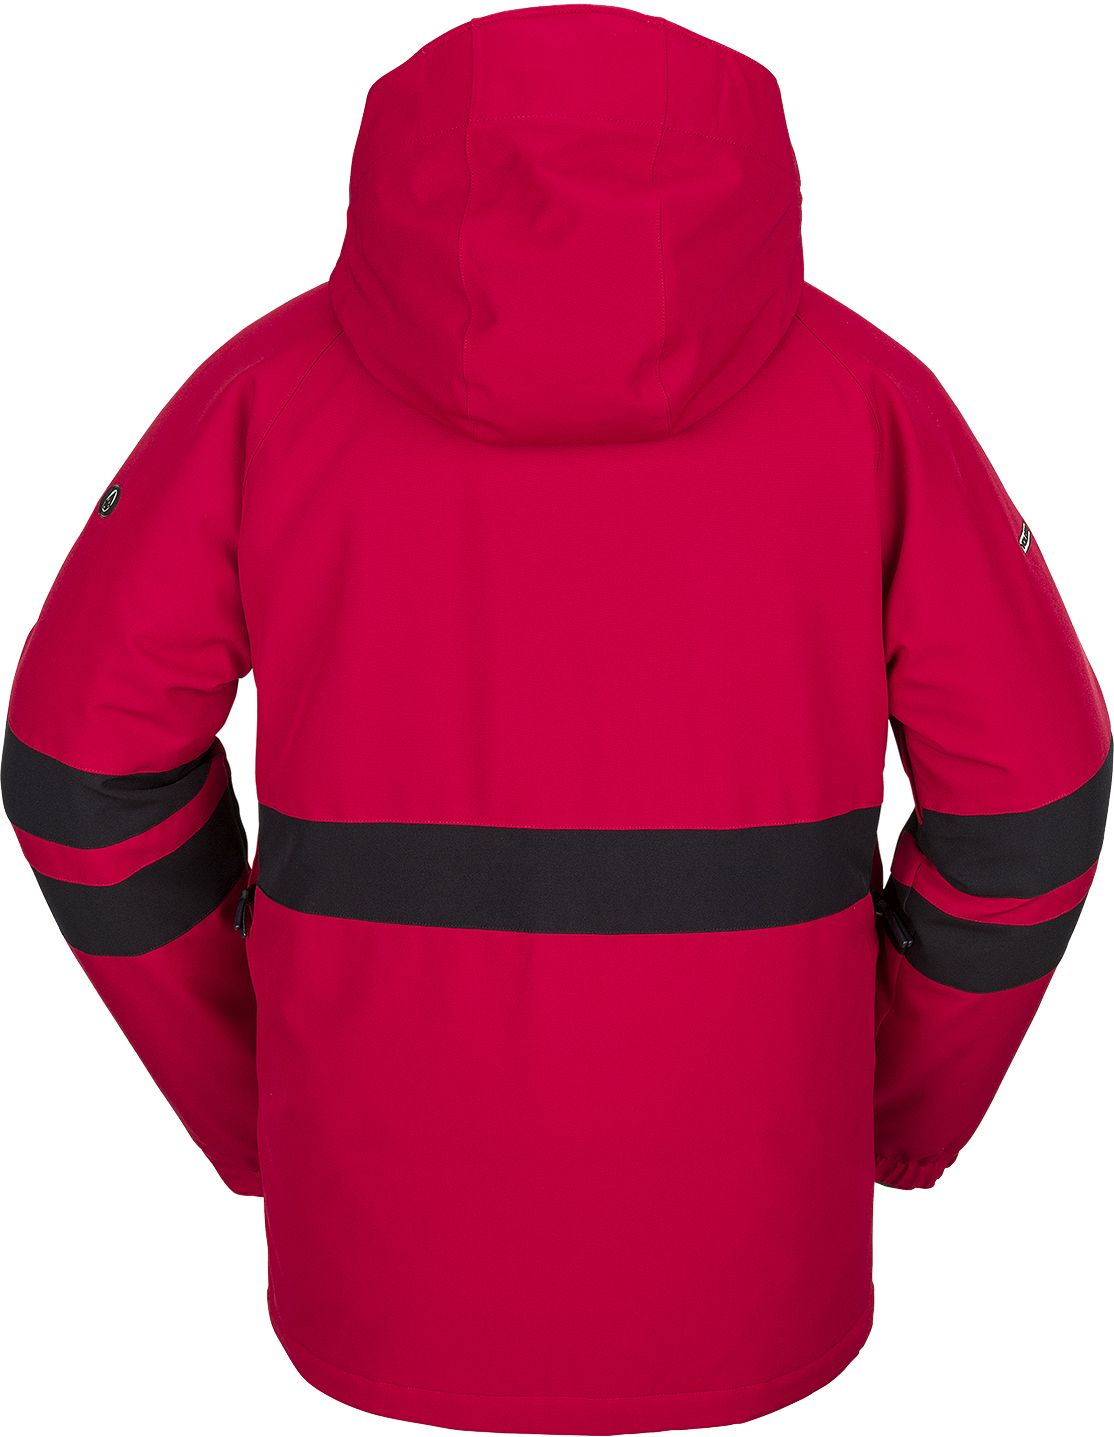 Volcom JP Insulated Jacket Snowboardjacke – Rot